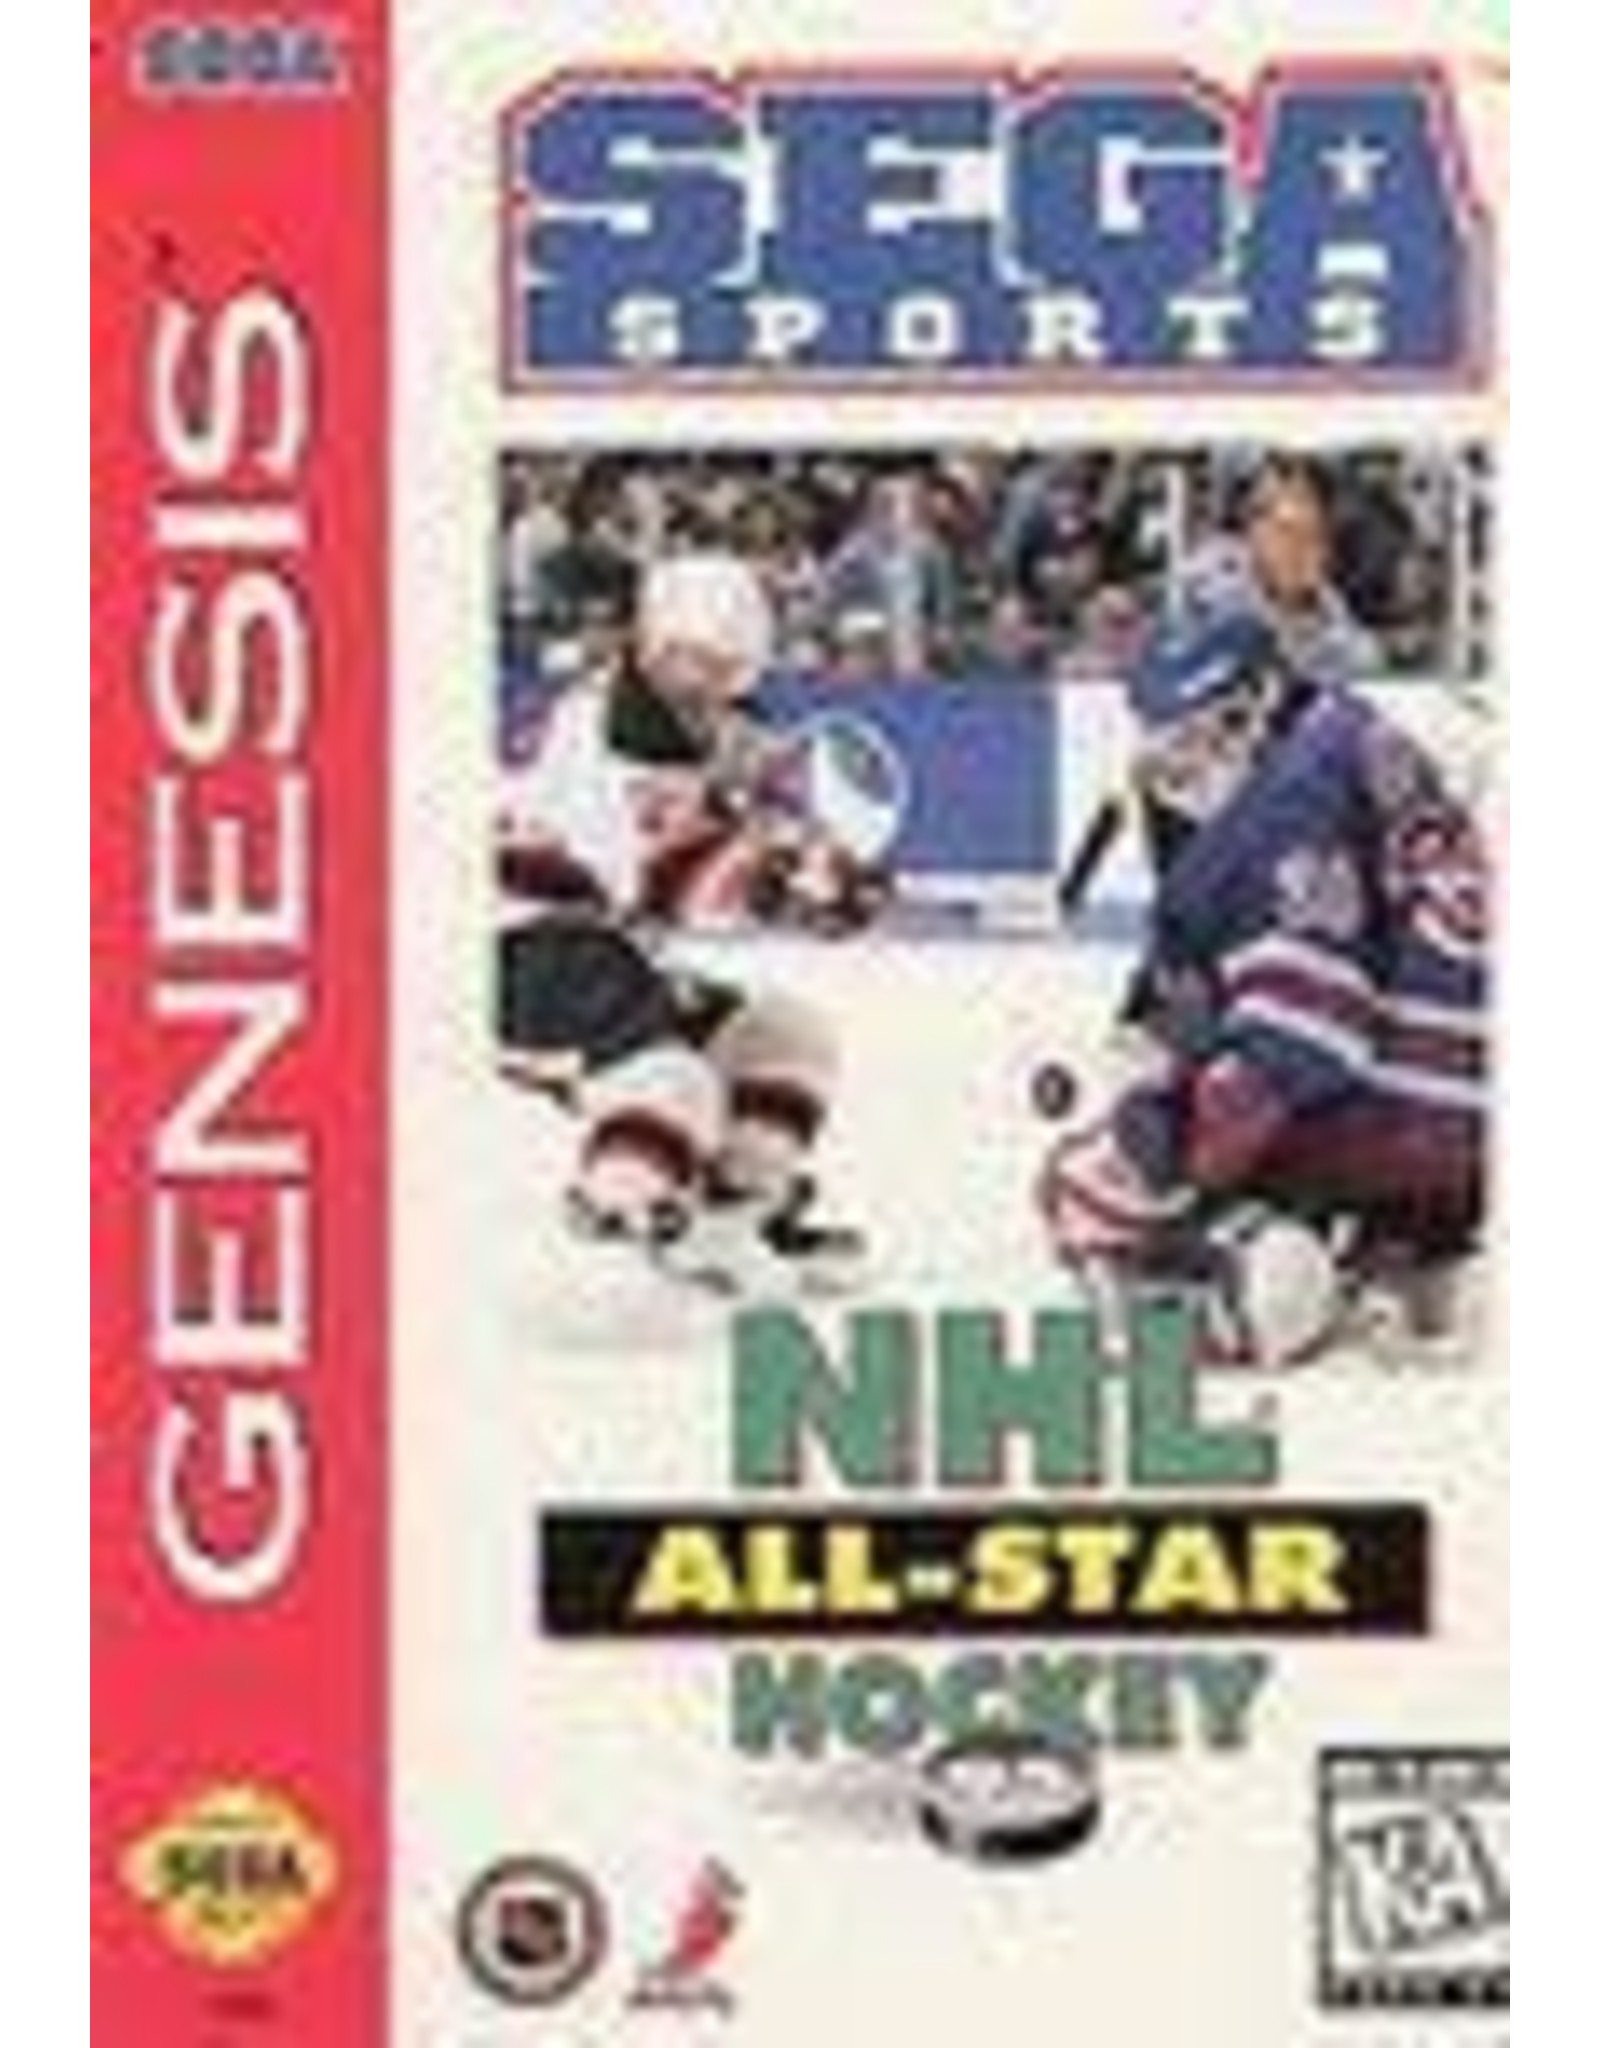 Sega Genesis NHL All-Star Hockey 95 (Cart Only, Damaged Label)